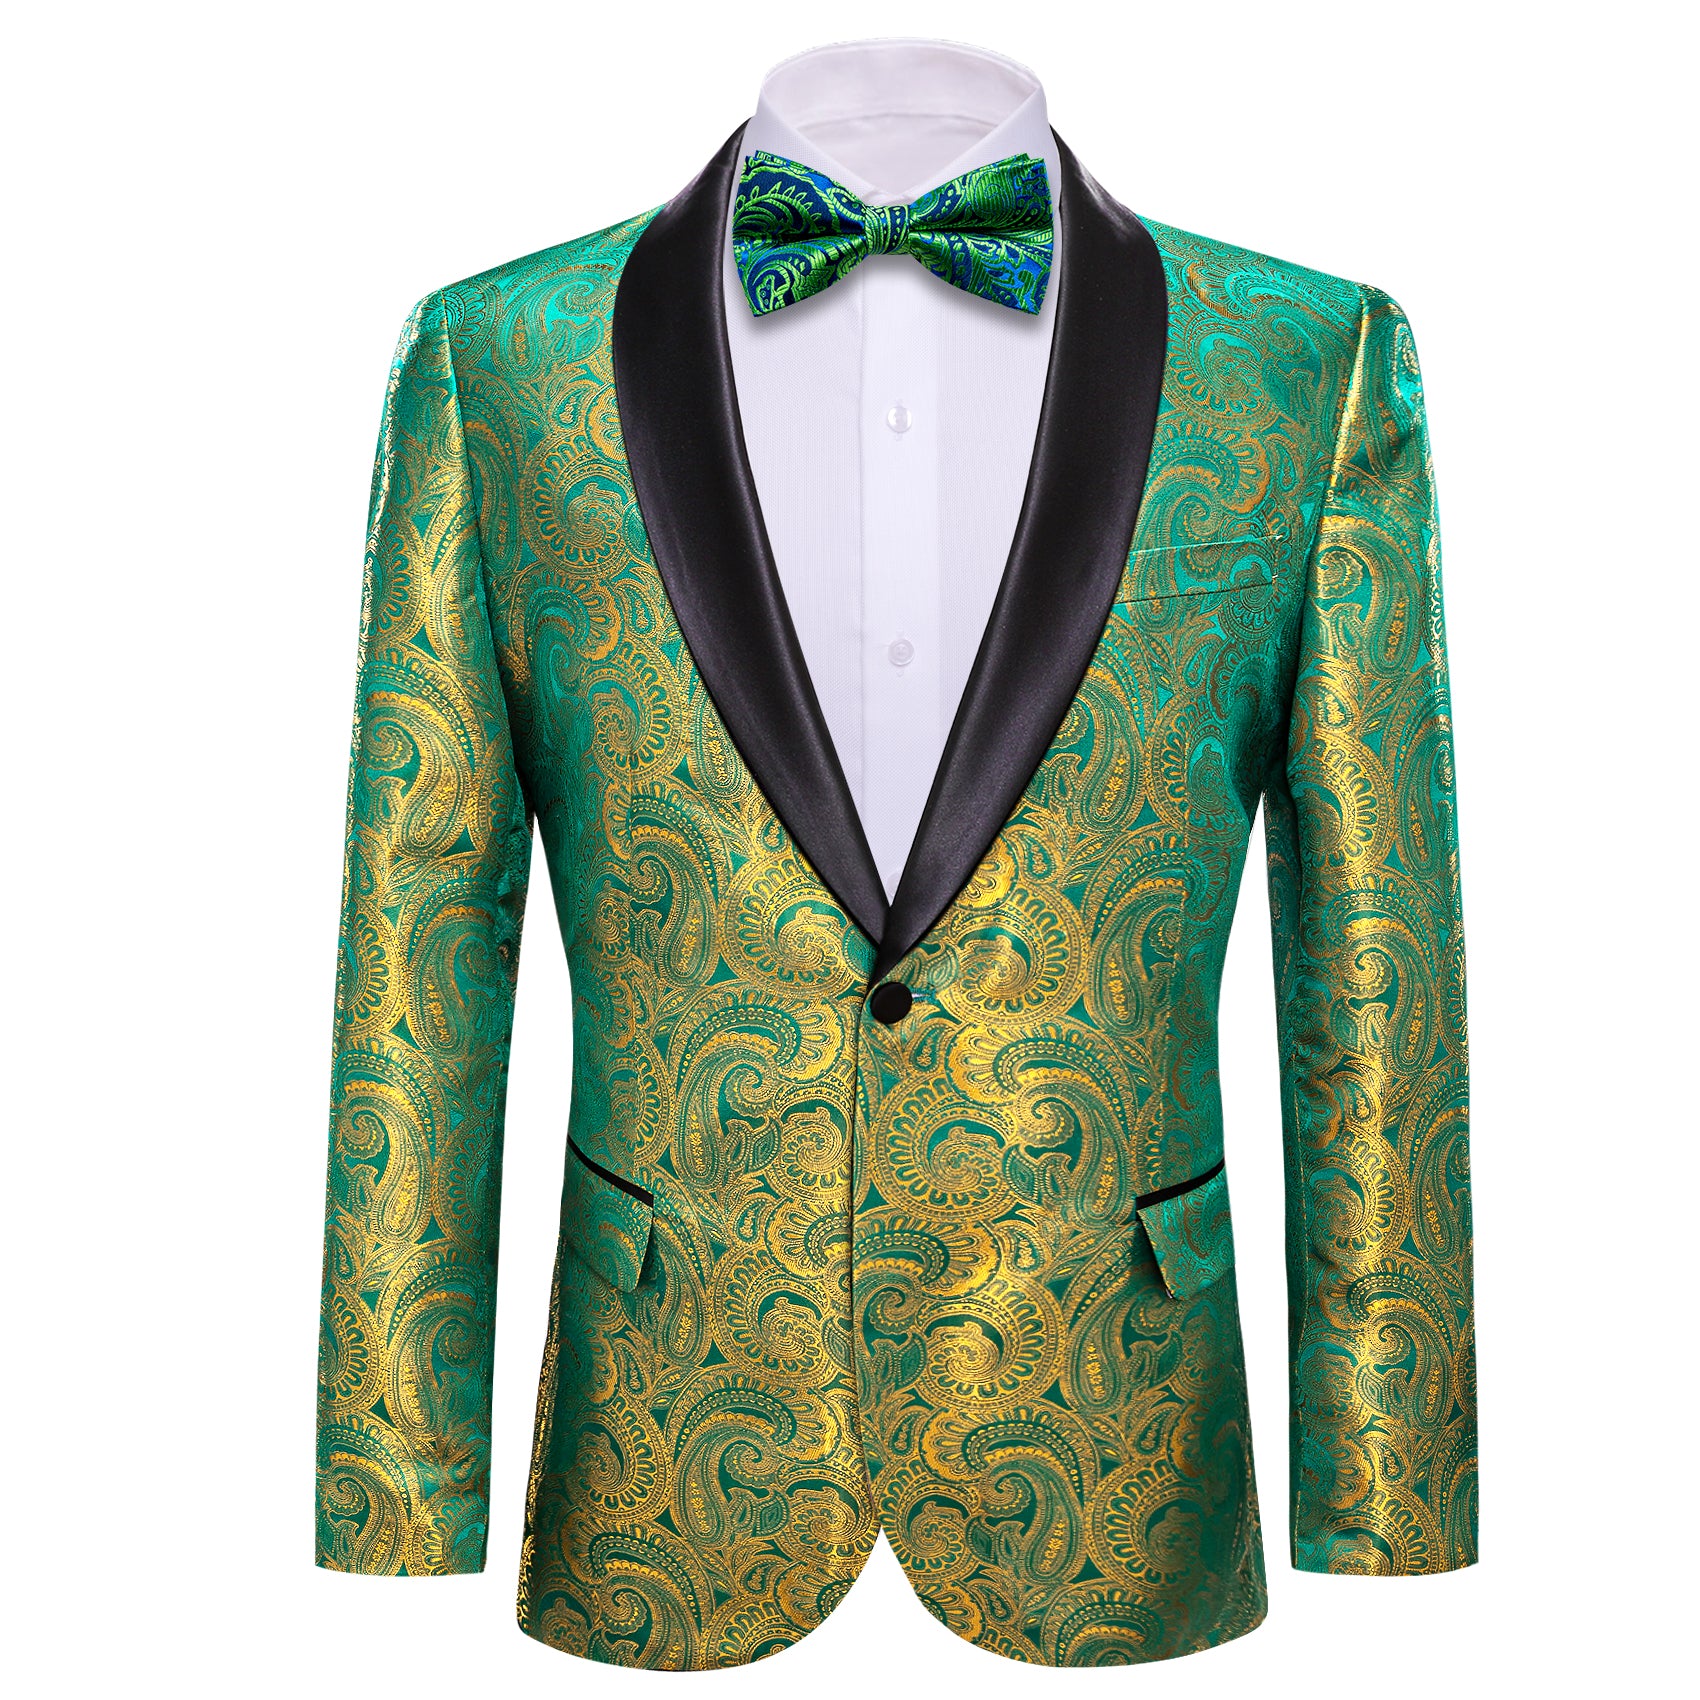 Men's Dress Party Bright Green Floral Suit Jacket Slim One Button Stylish Blazer